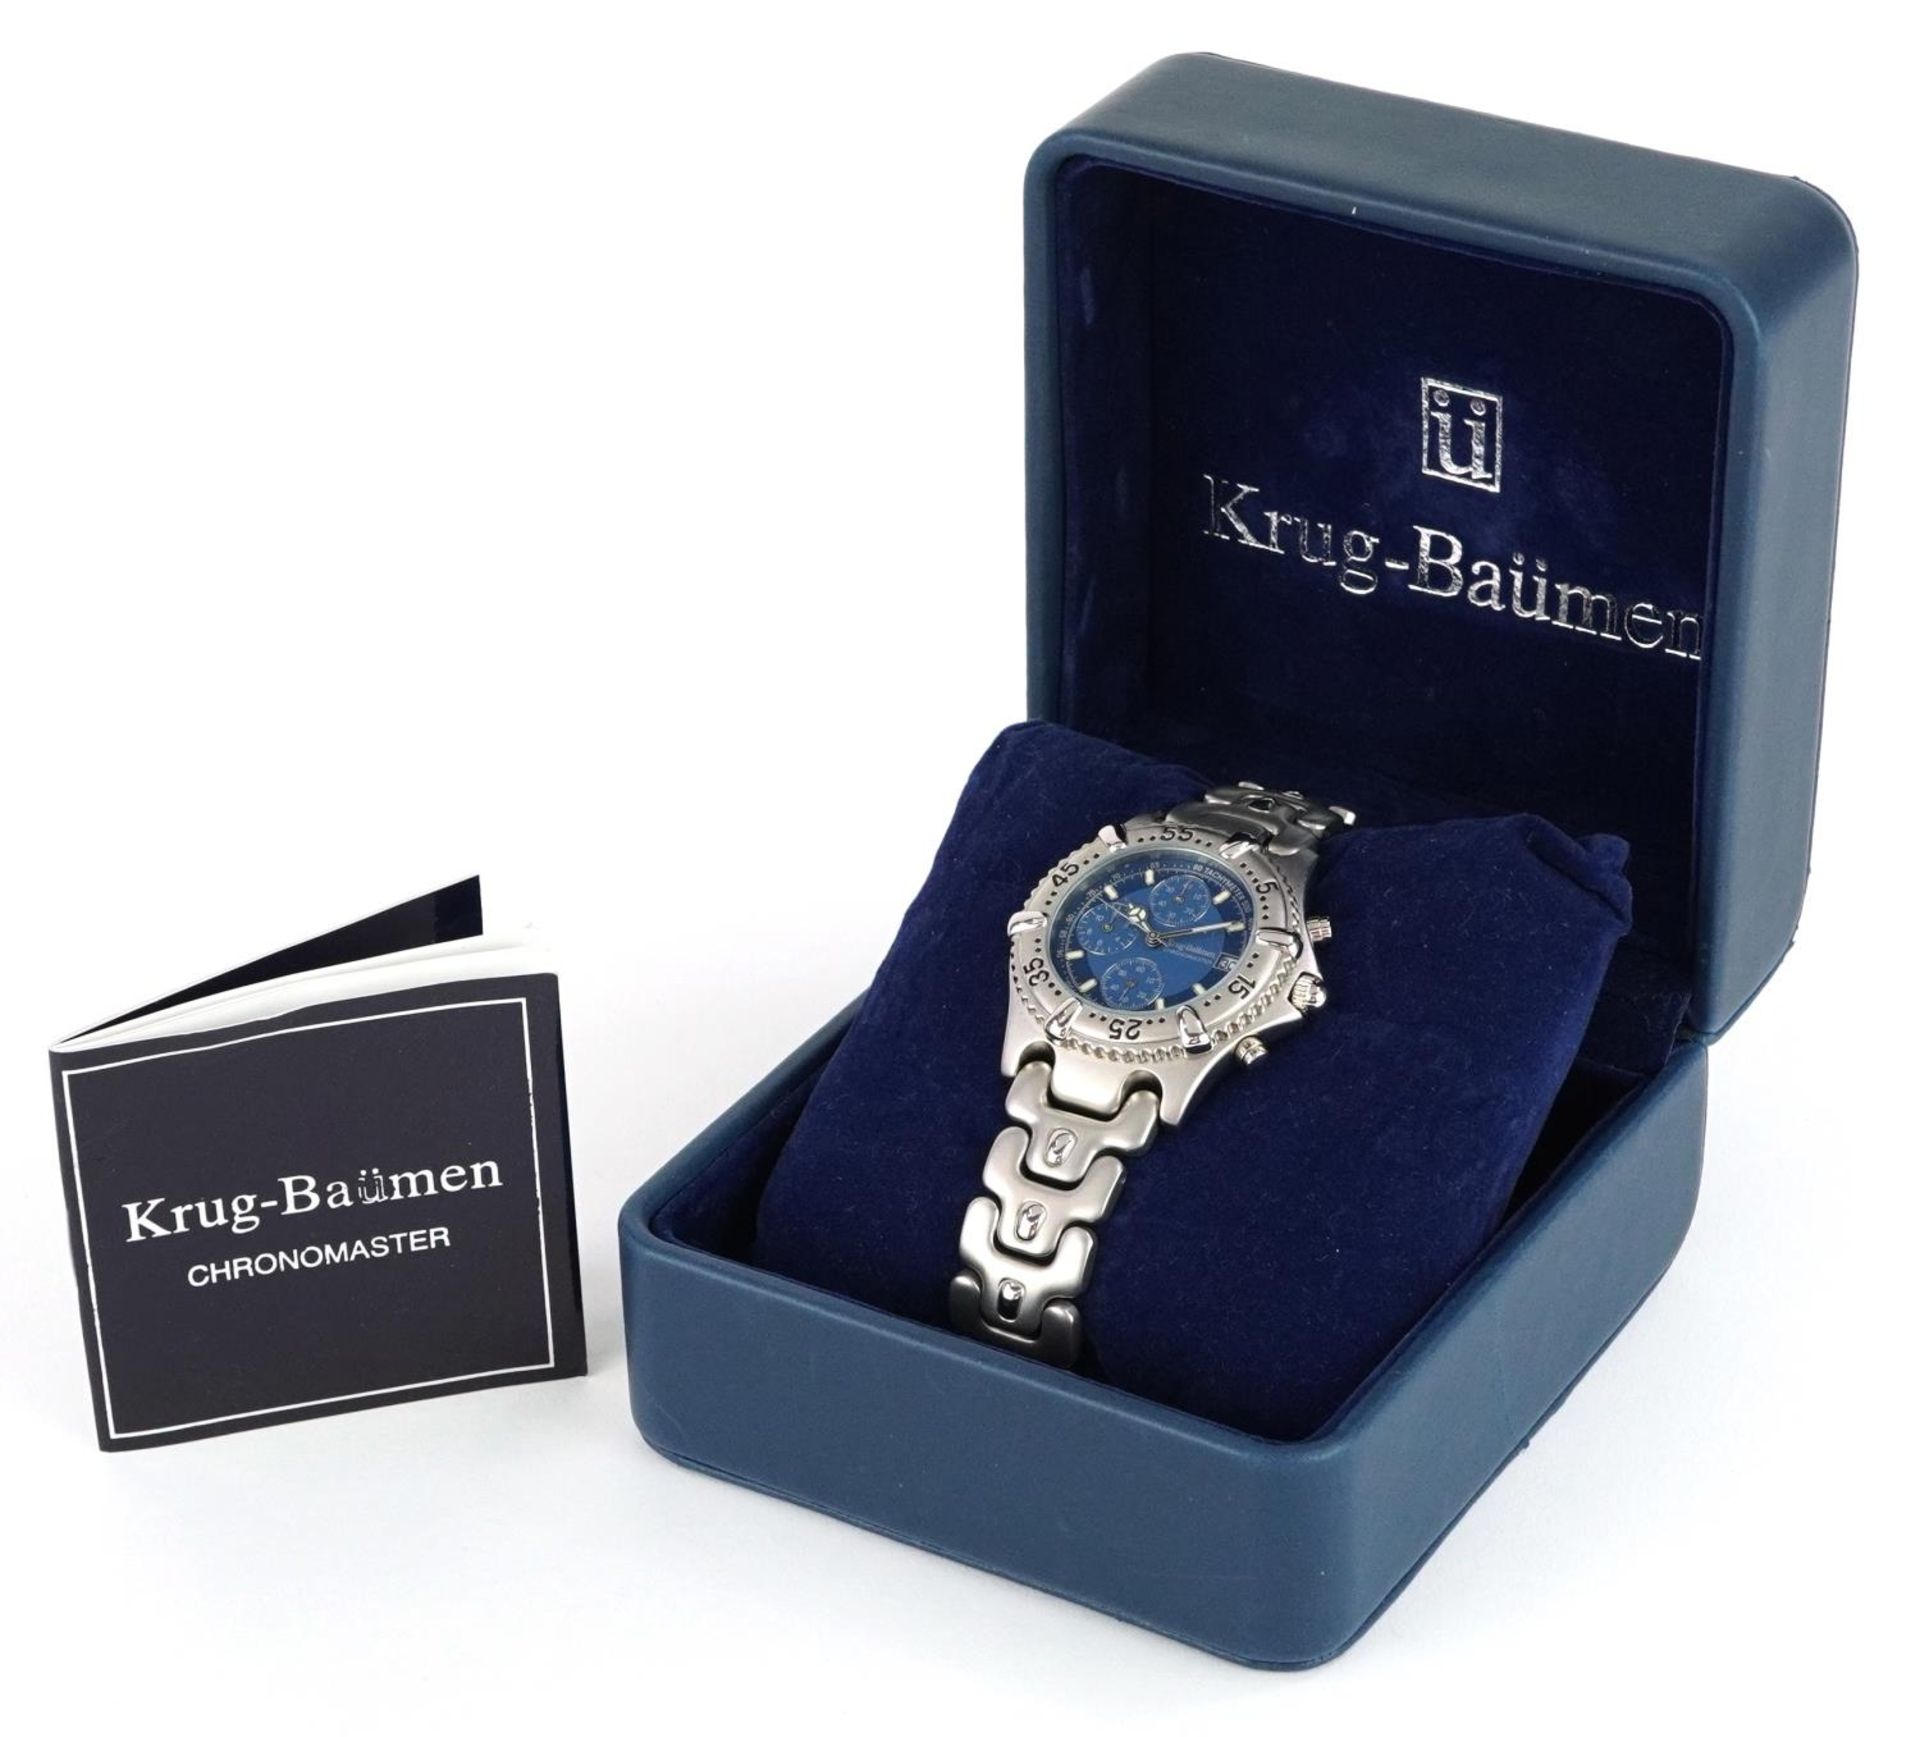 Krug Baumen, gentlemen's Chromomaster wristwatch with date aperture, box and booklet, the case